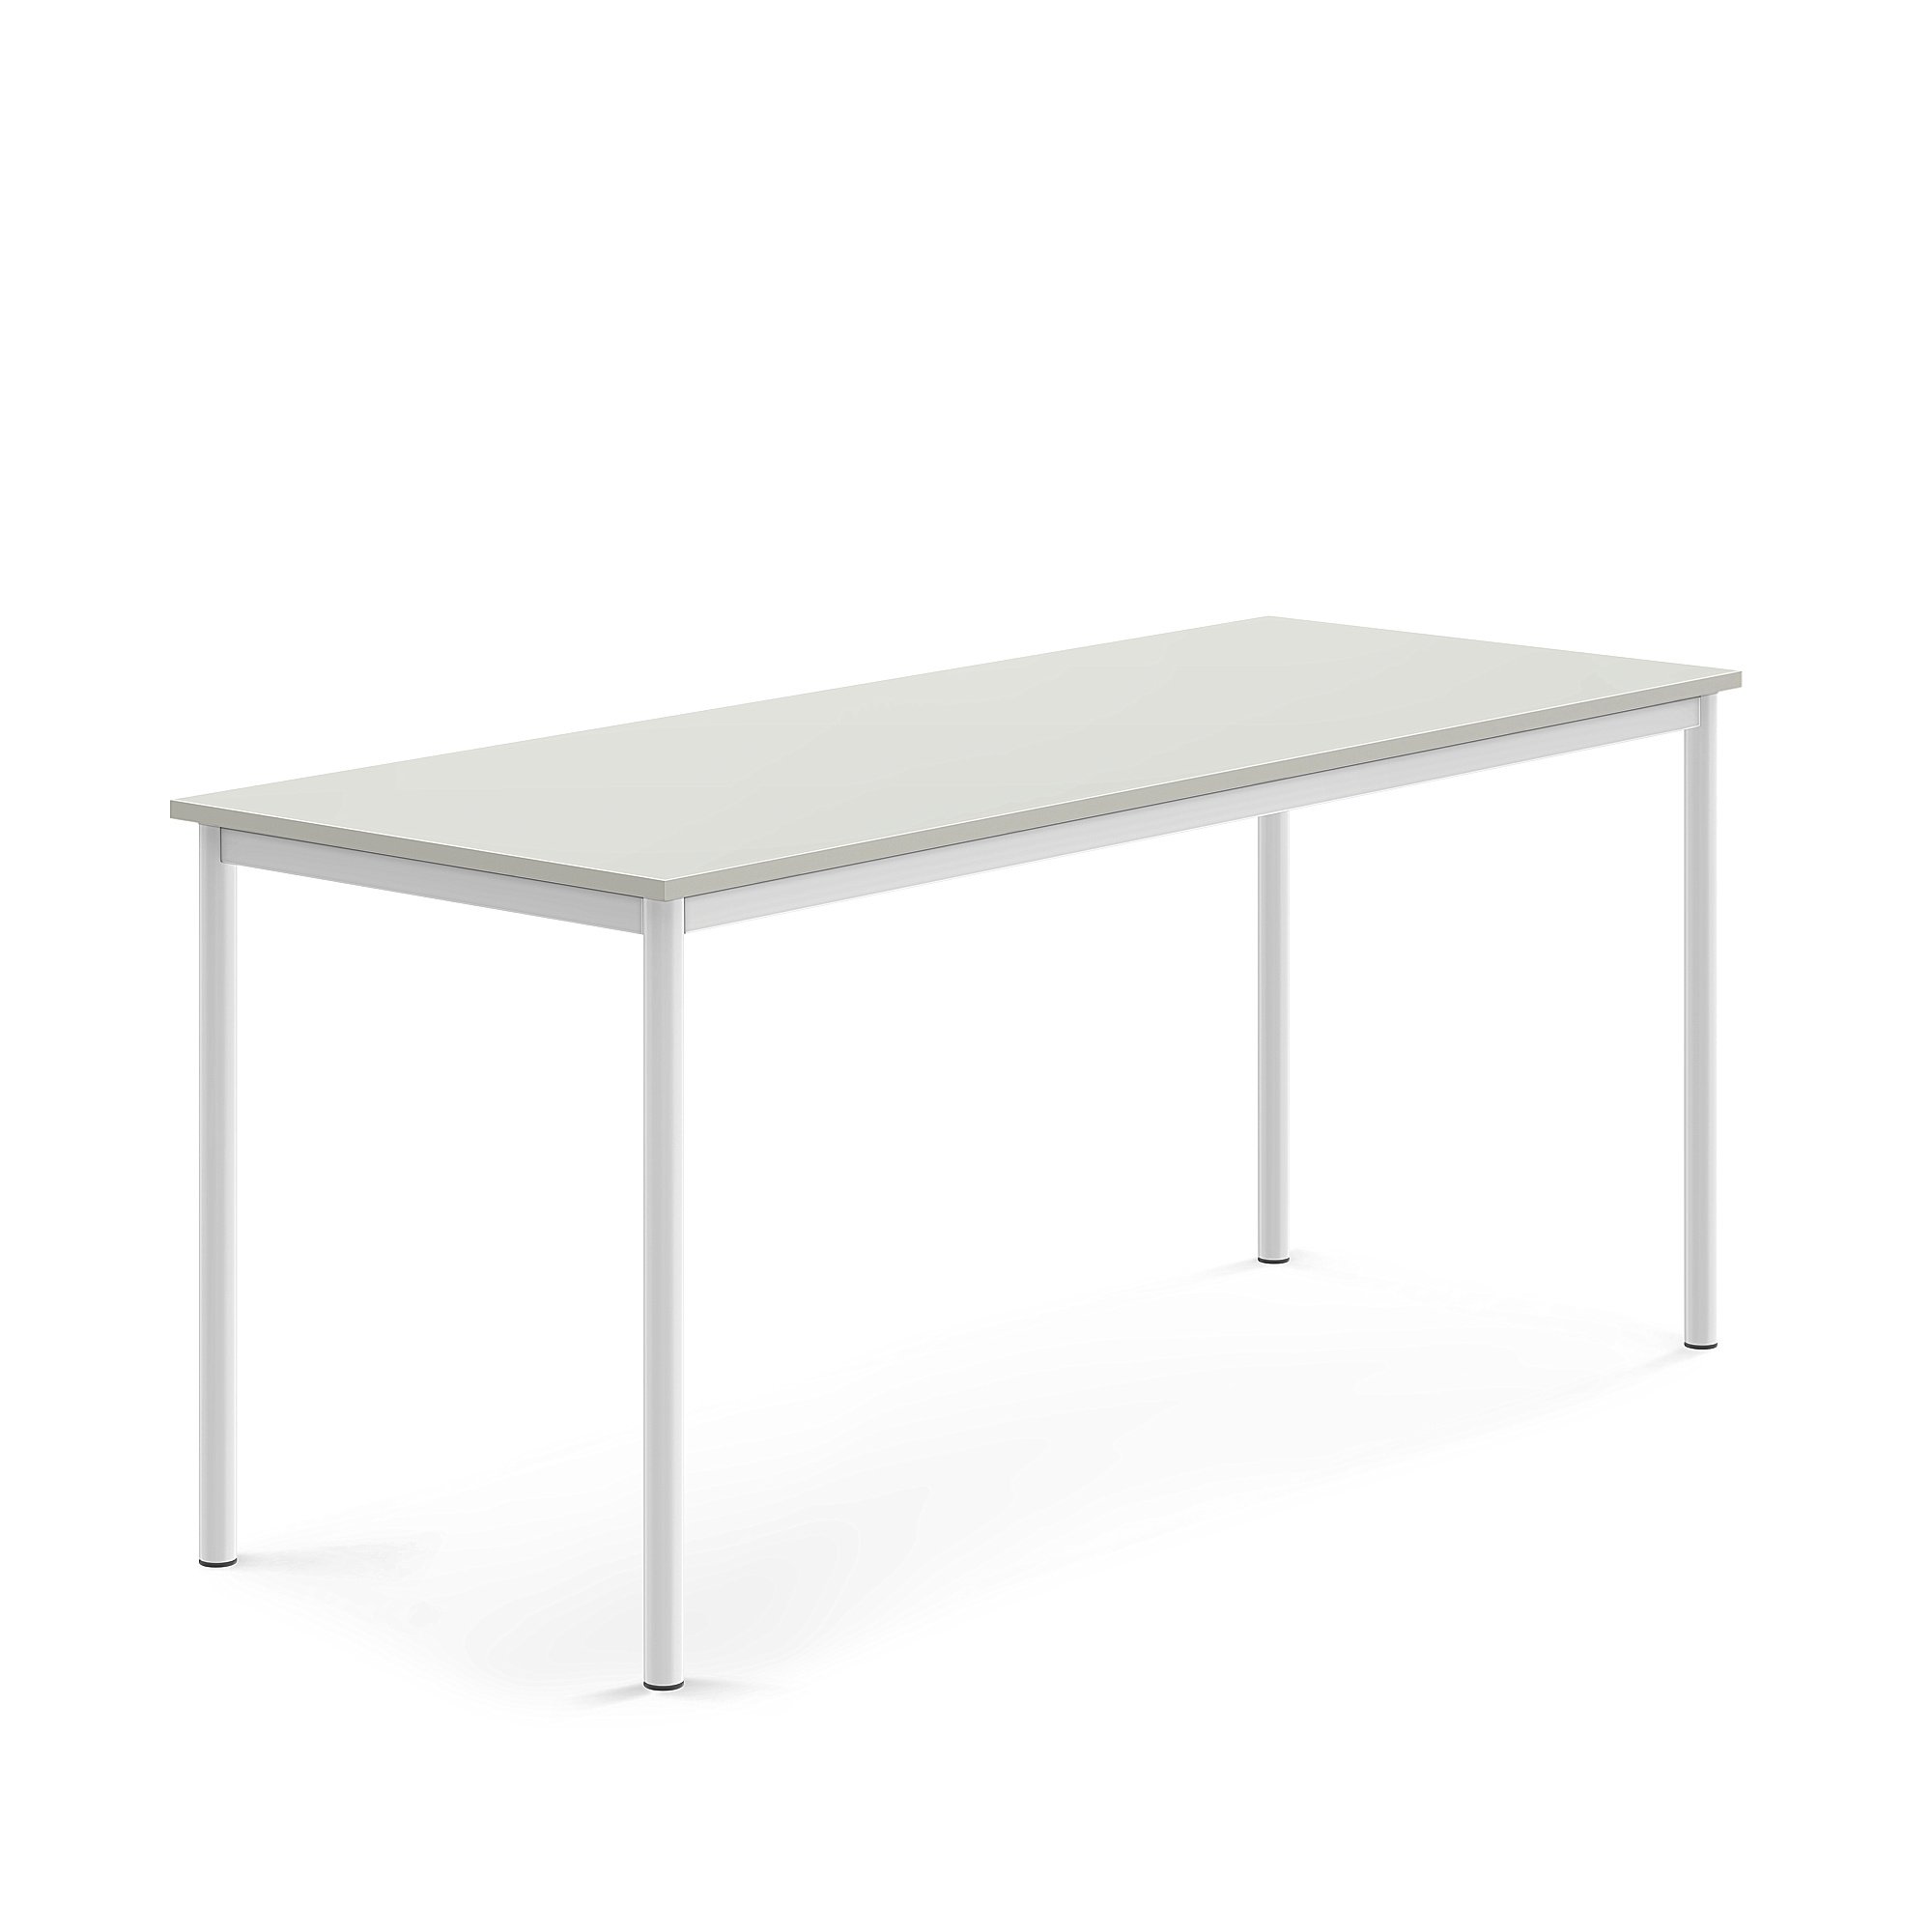 Stůl BORÅS, 1800x700x760 mm, bílé nohy, HPL deska, šedá